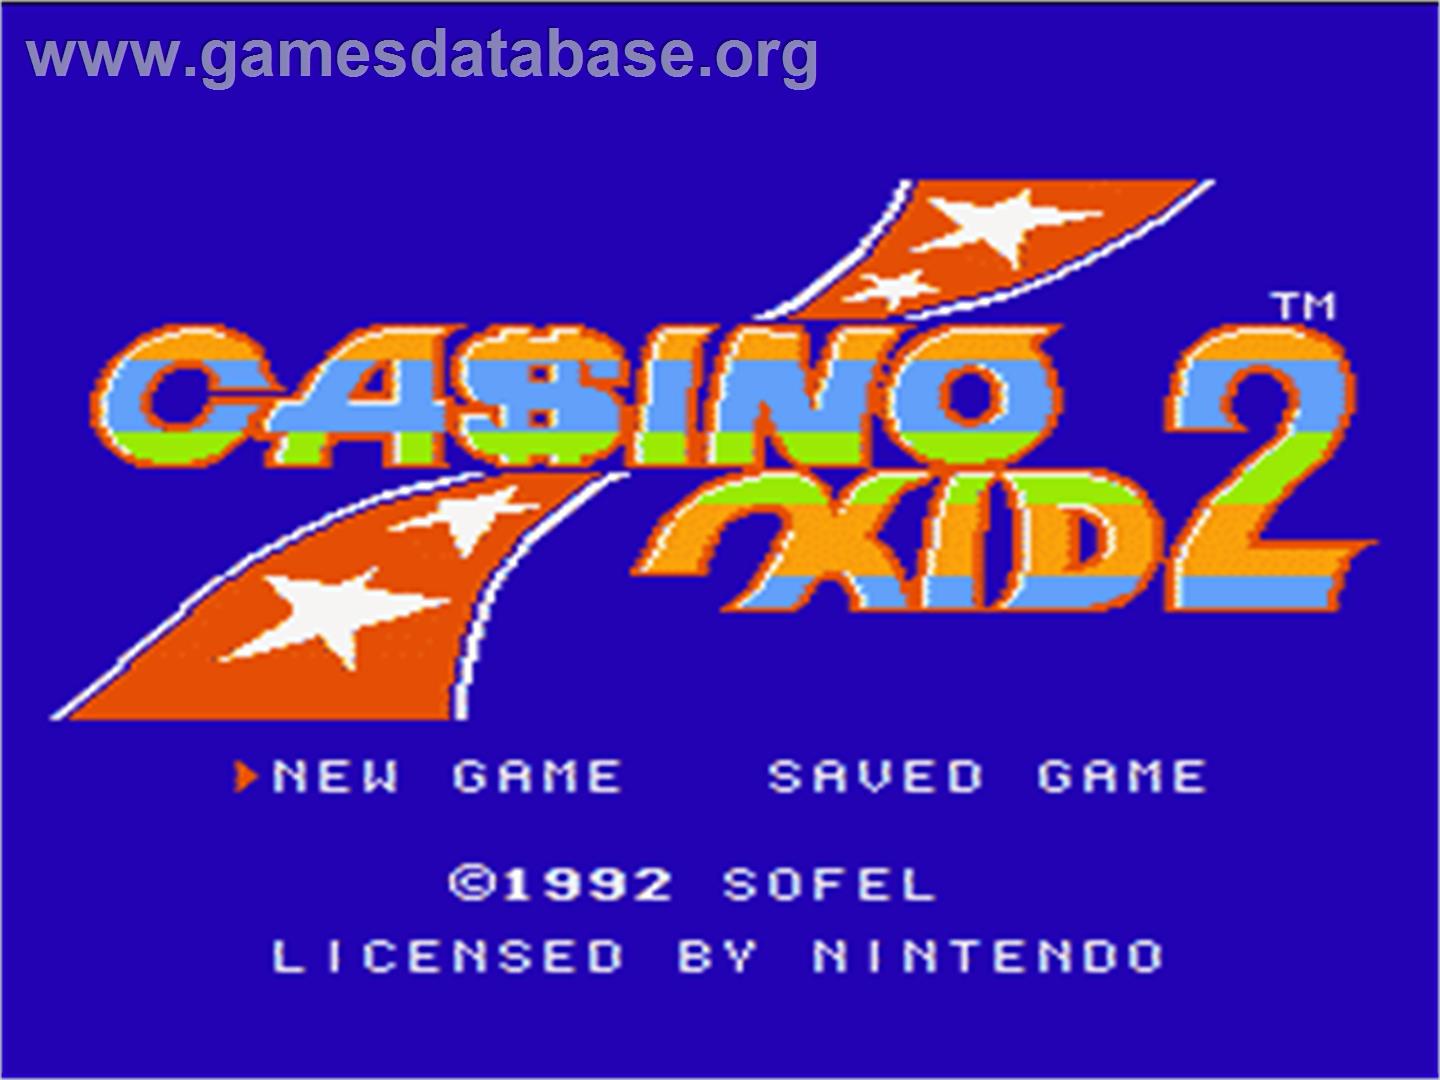 Casino Kid 2 - Nintendo NES - Artwork - Title Screen